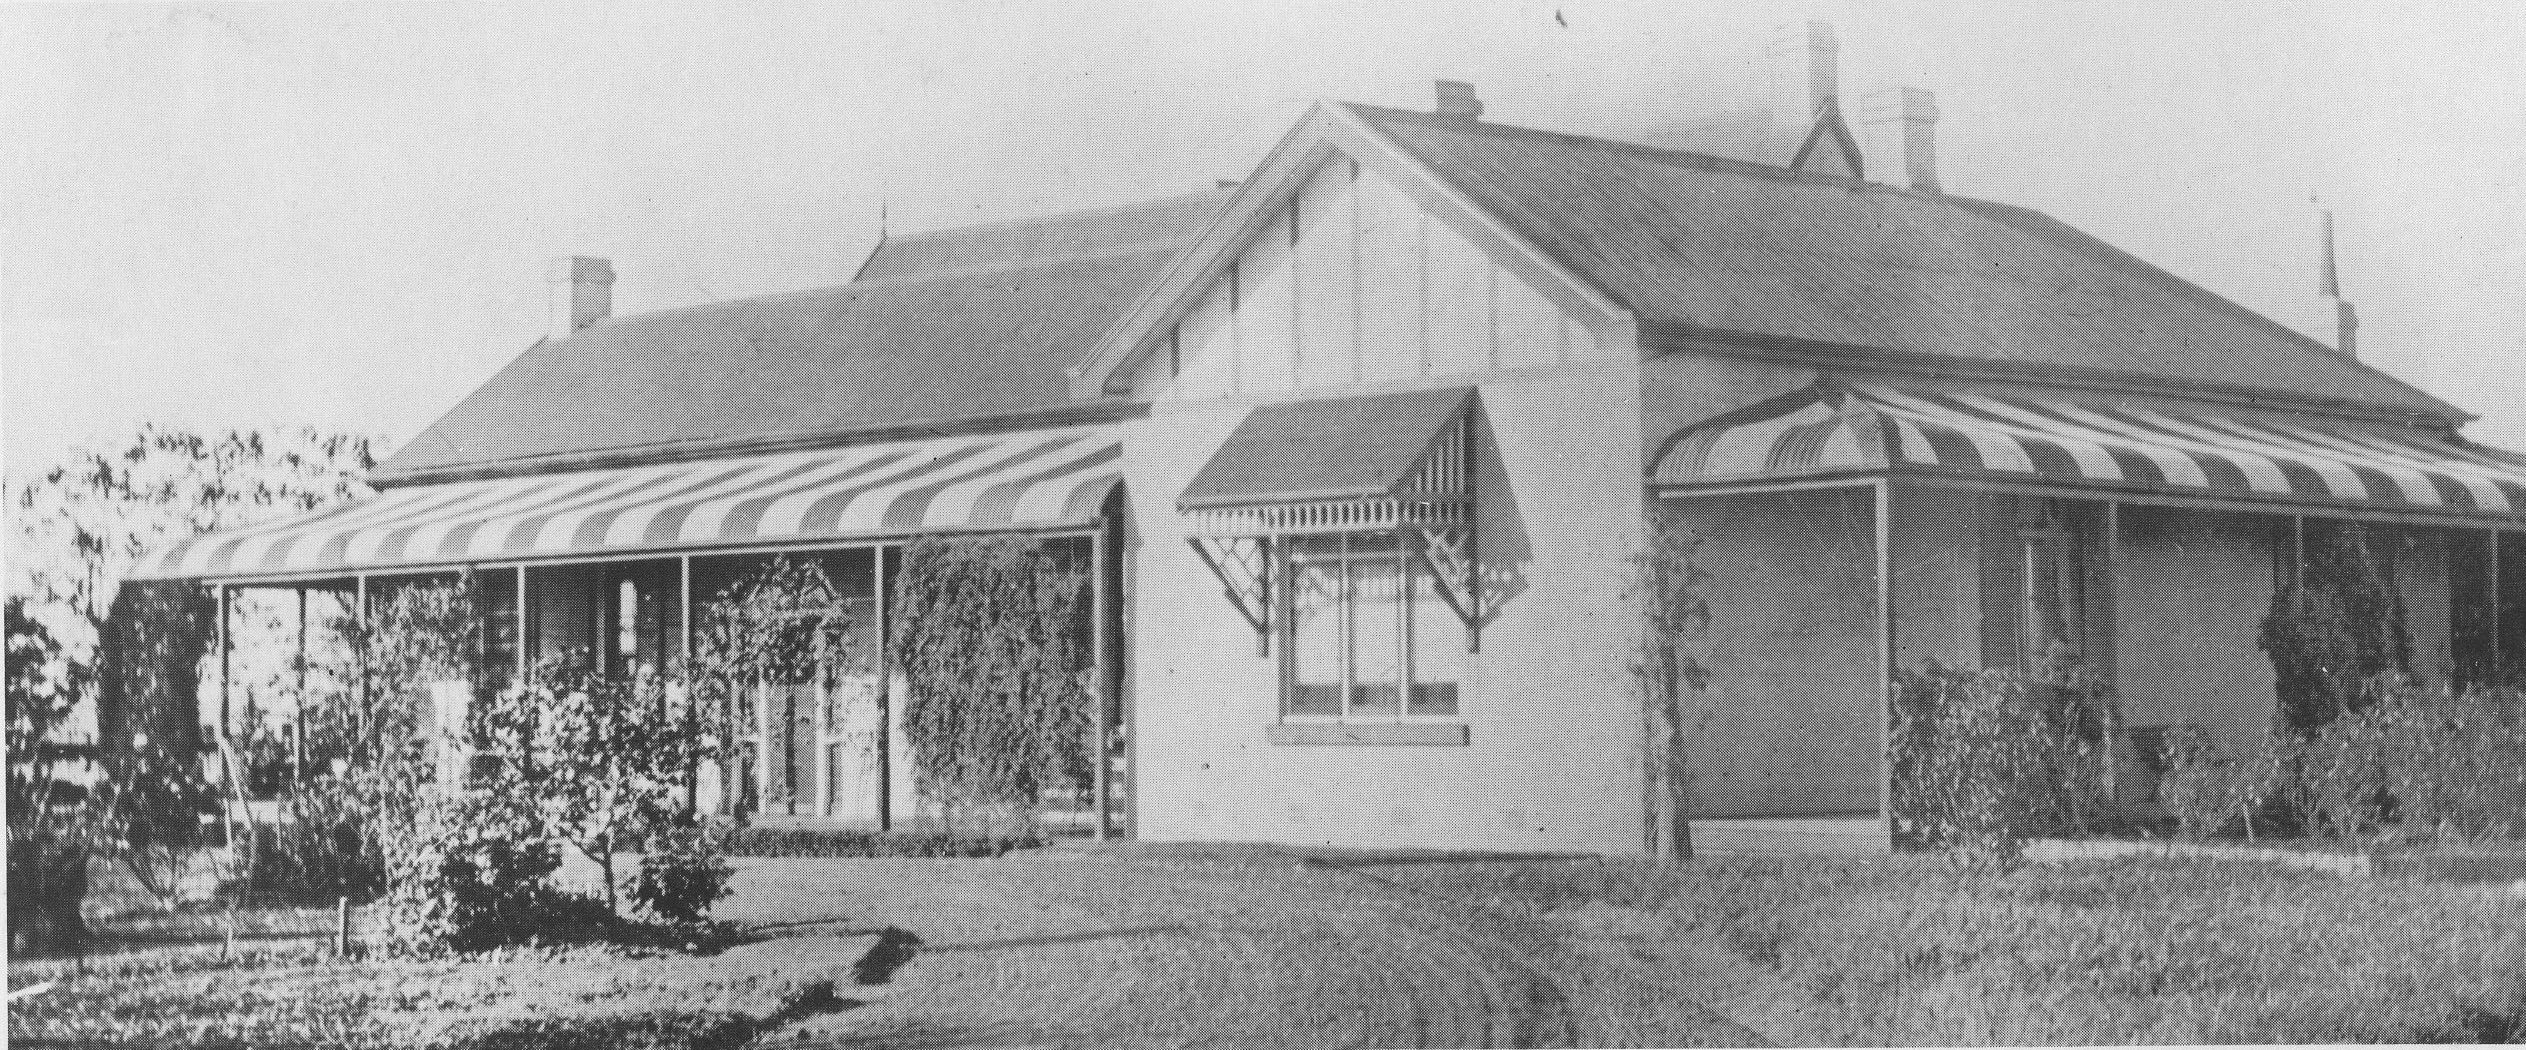 Collingwood House, 1920